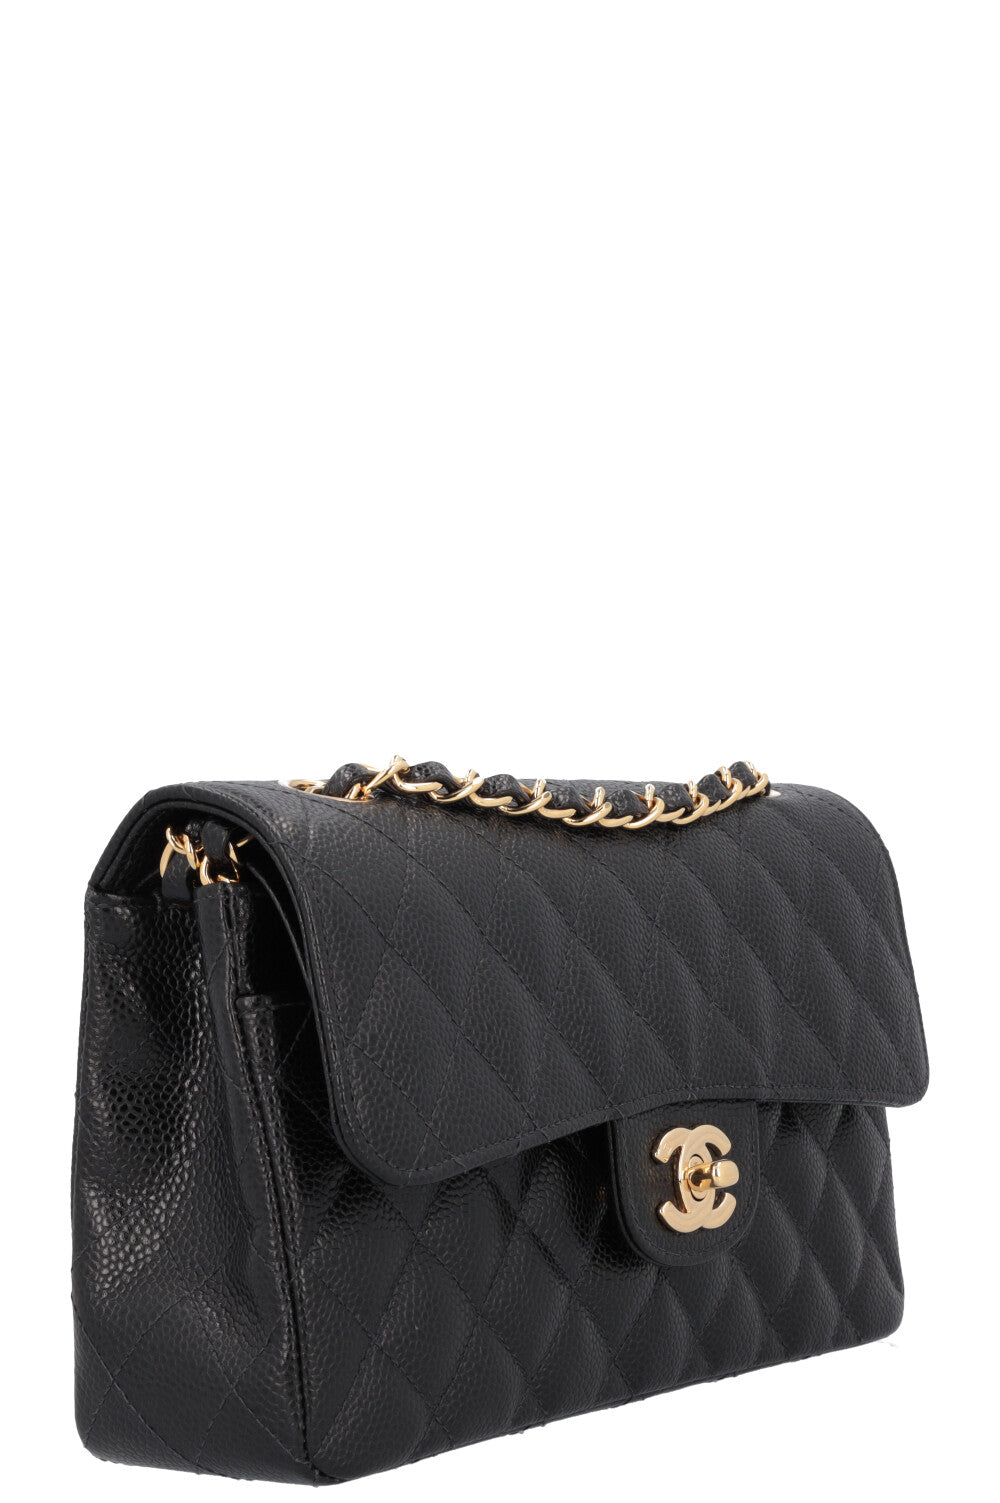 CHANEL Small Double Flap Bag Caviar Black